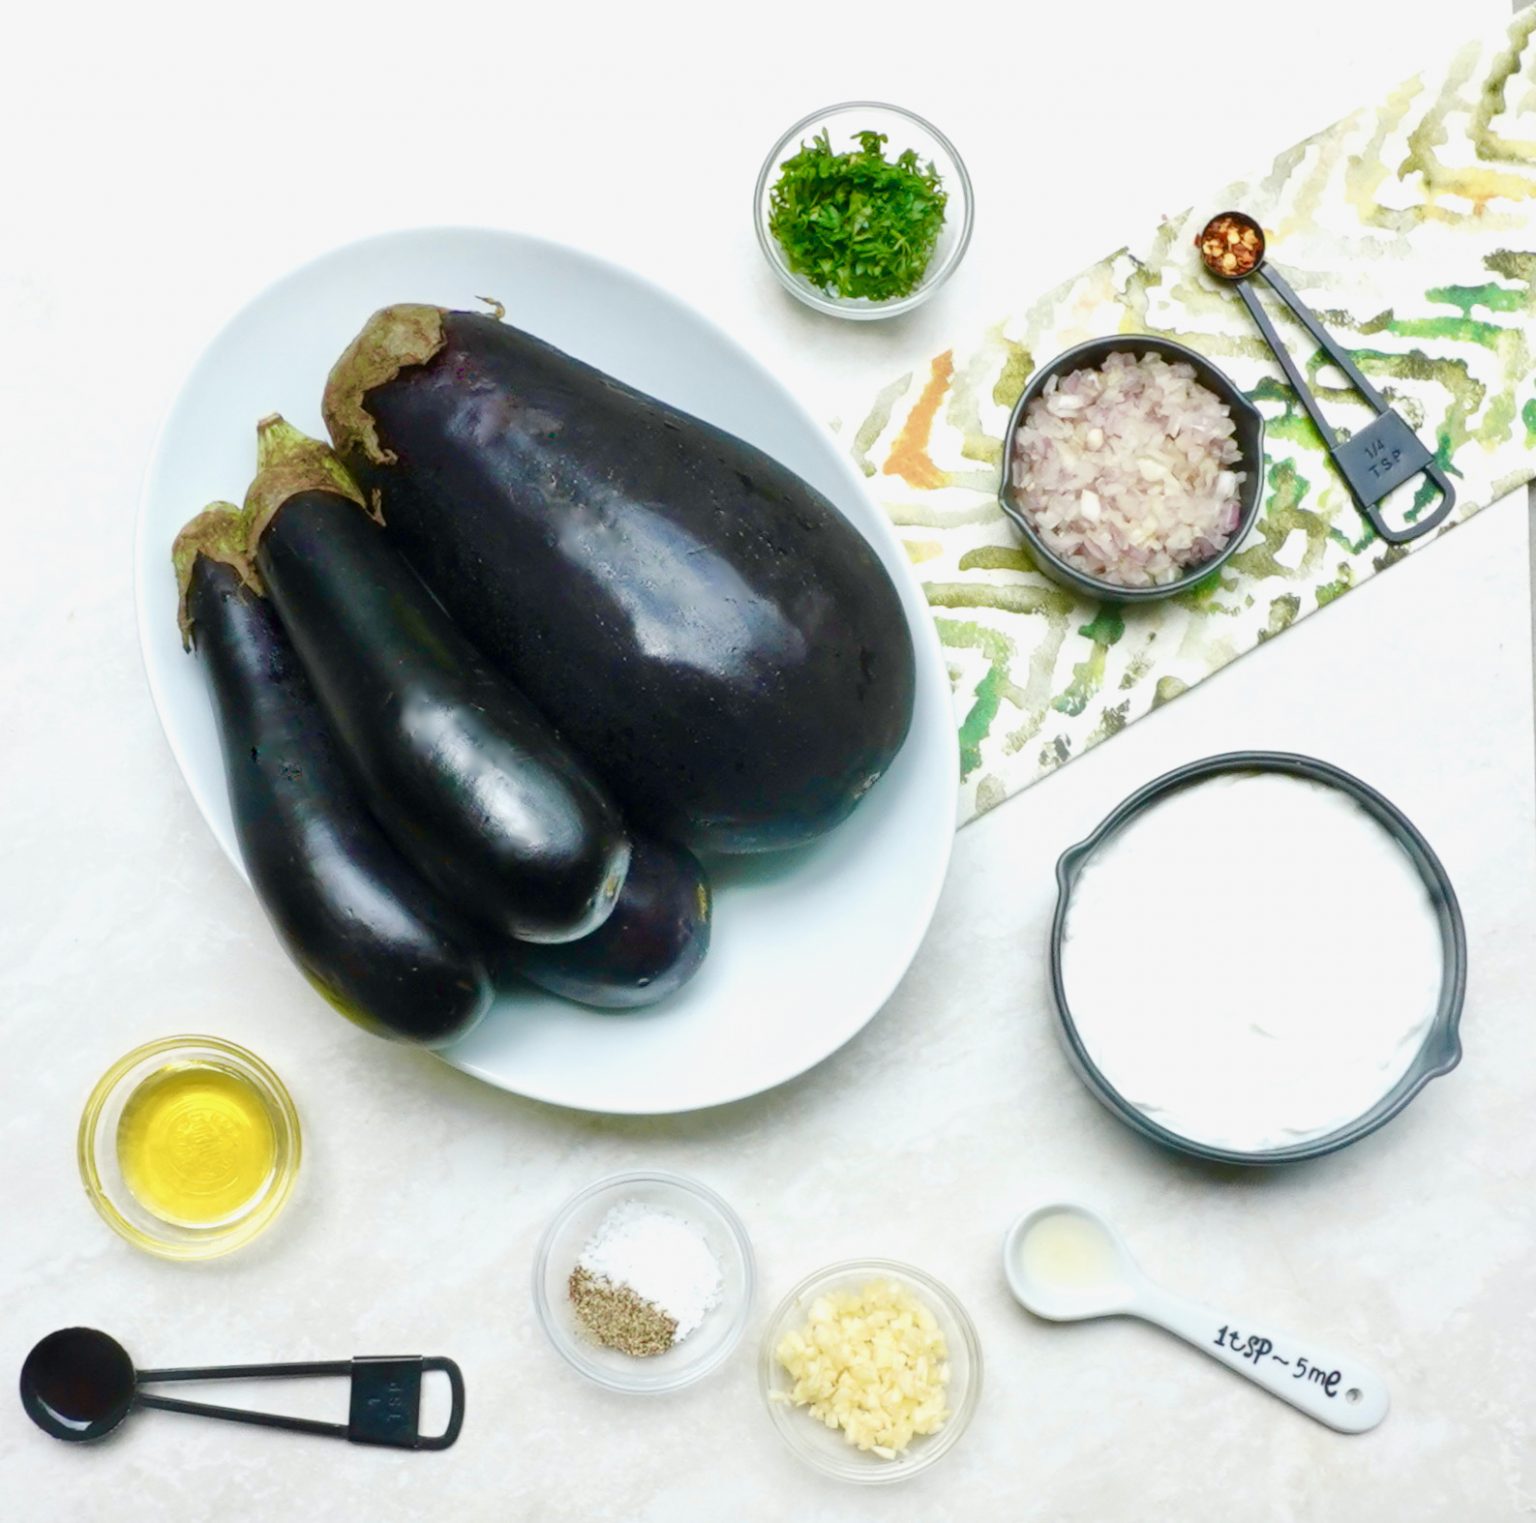 Roasted Eggplant Dip is a healthy vegetarian dip that is full of flavor.